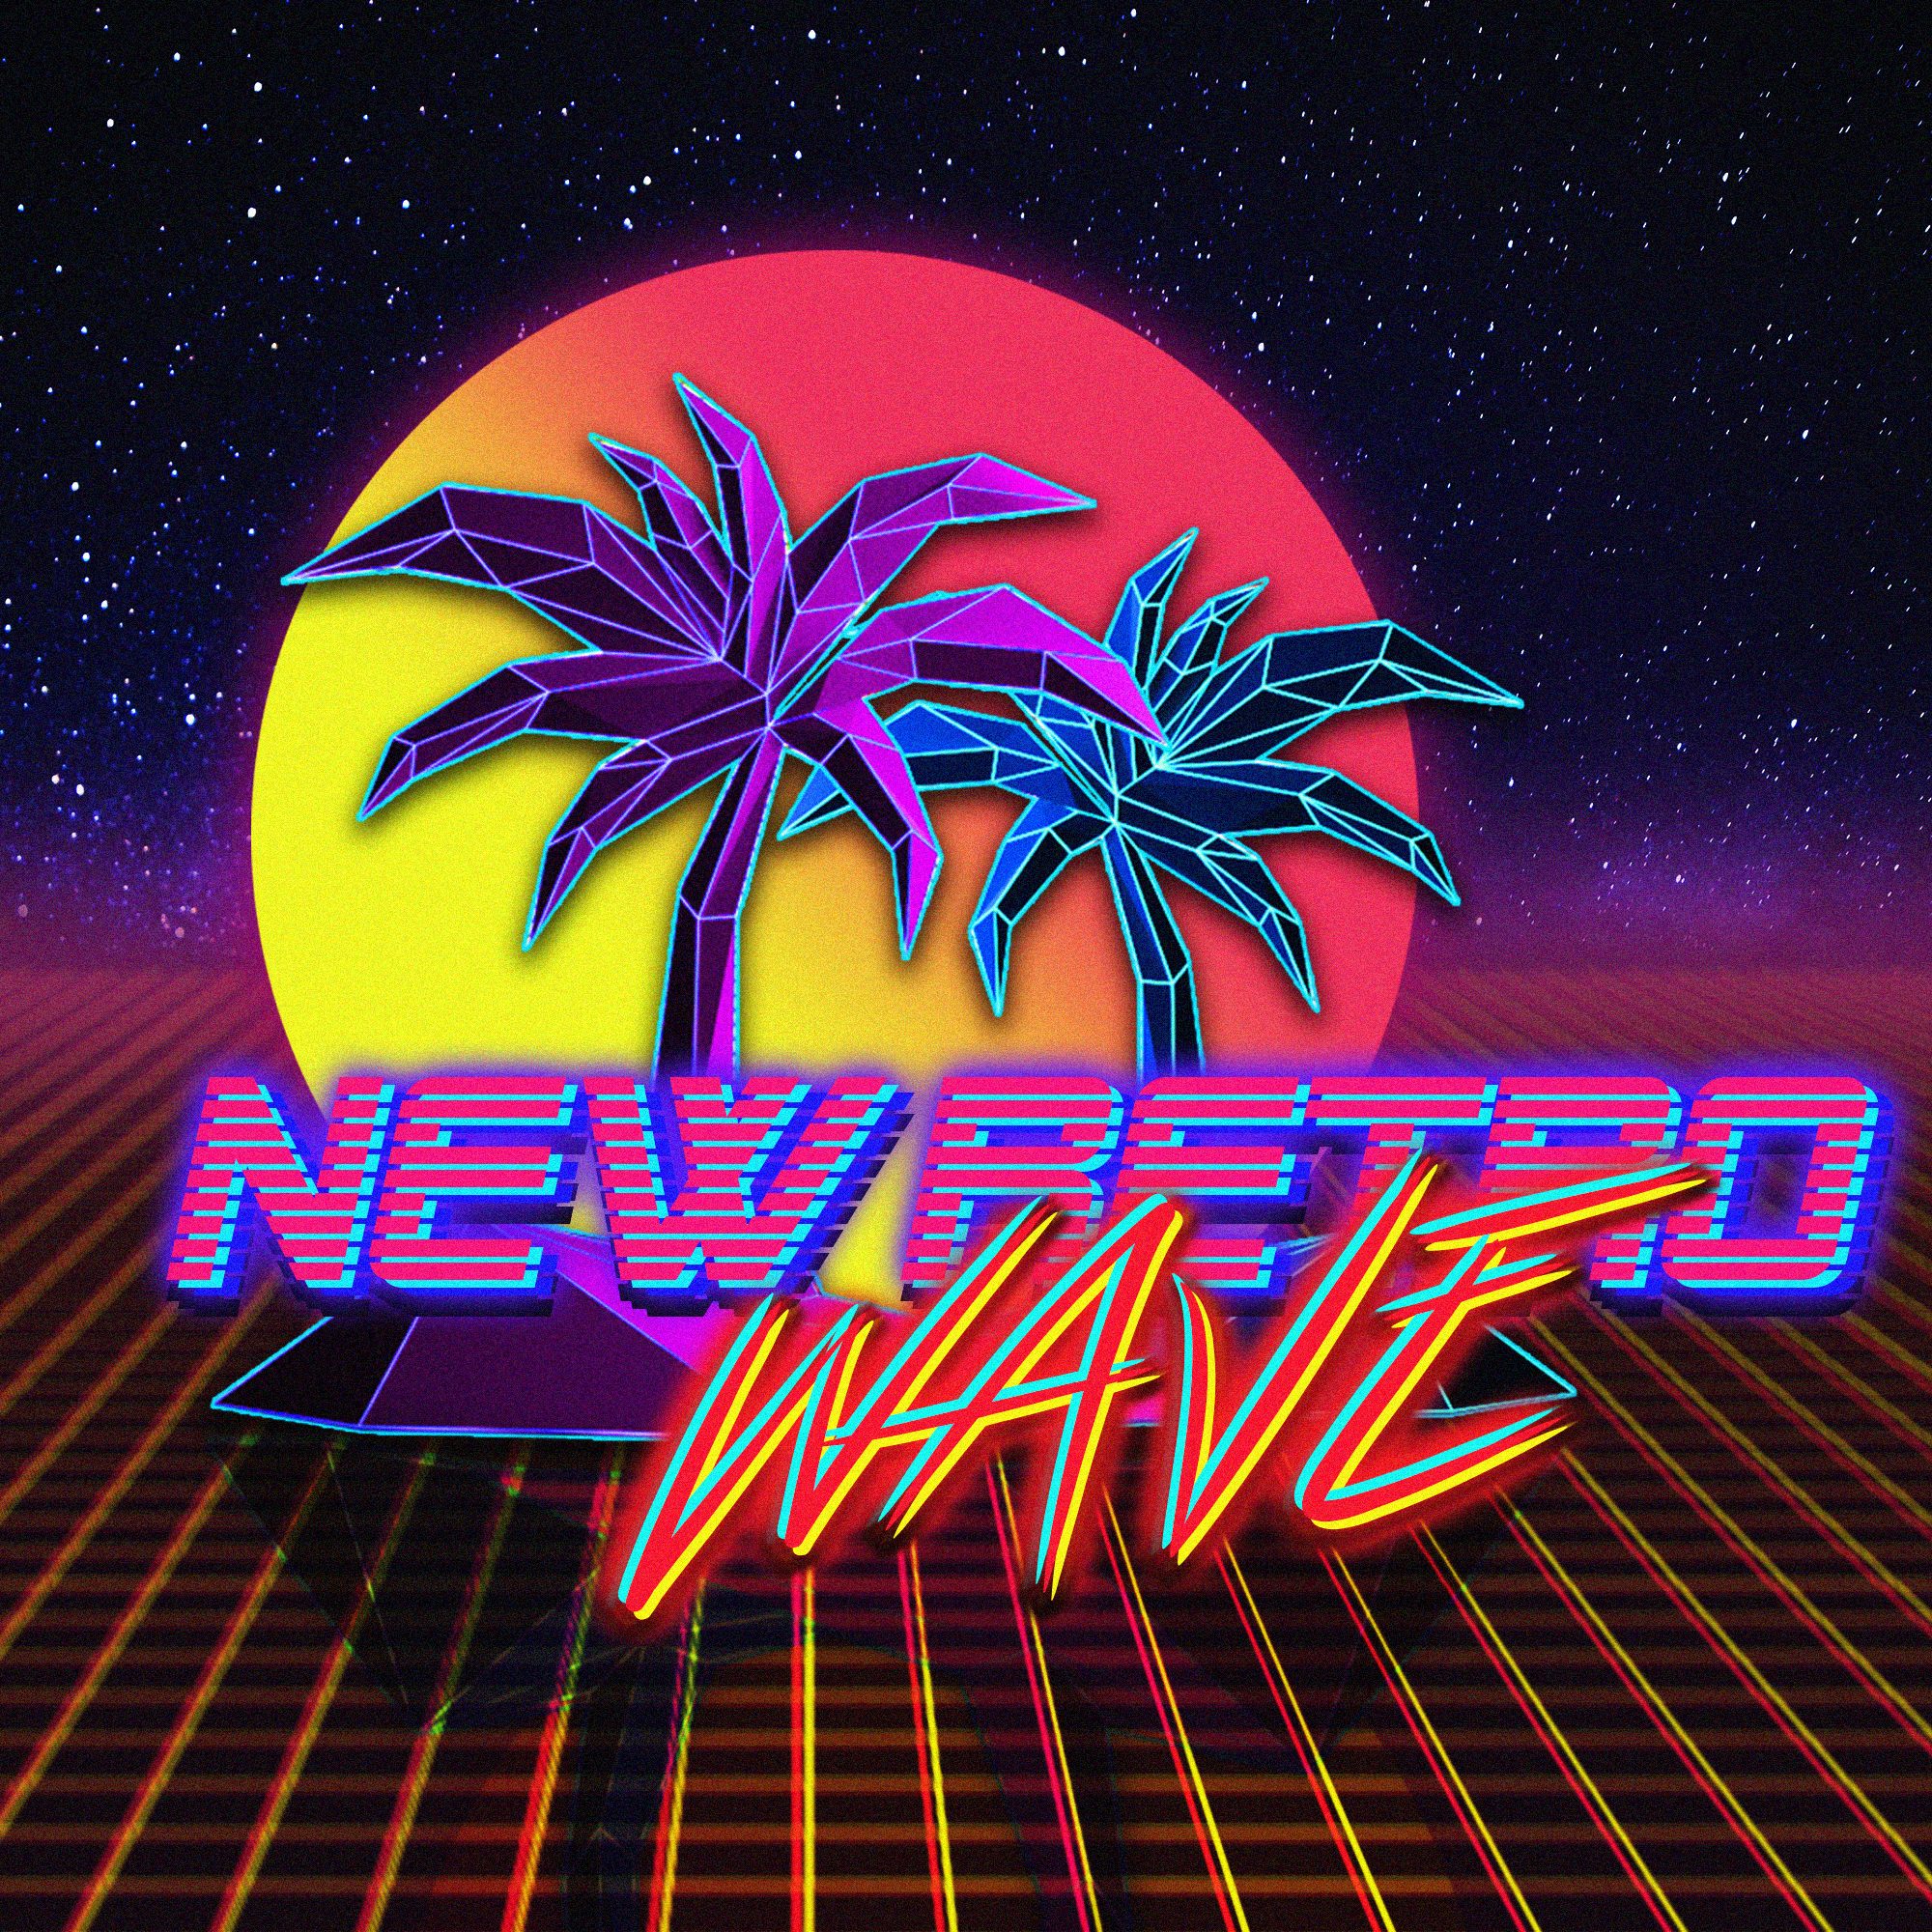 General 2000x2000 New Retro Wave vaporwave neon typography digital art 1980s